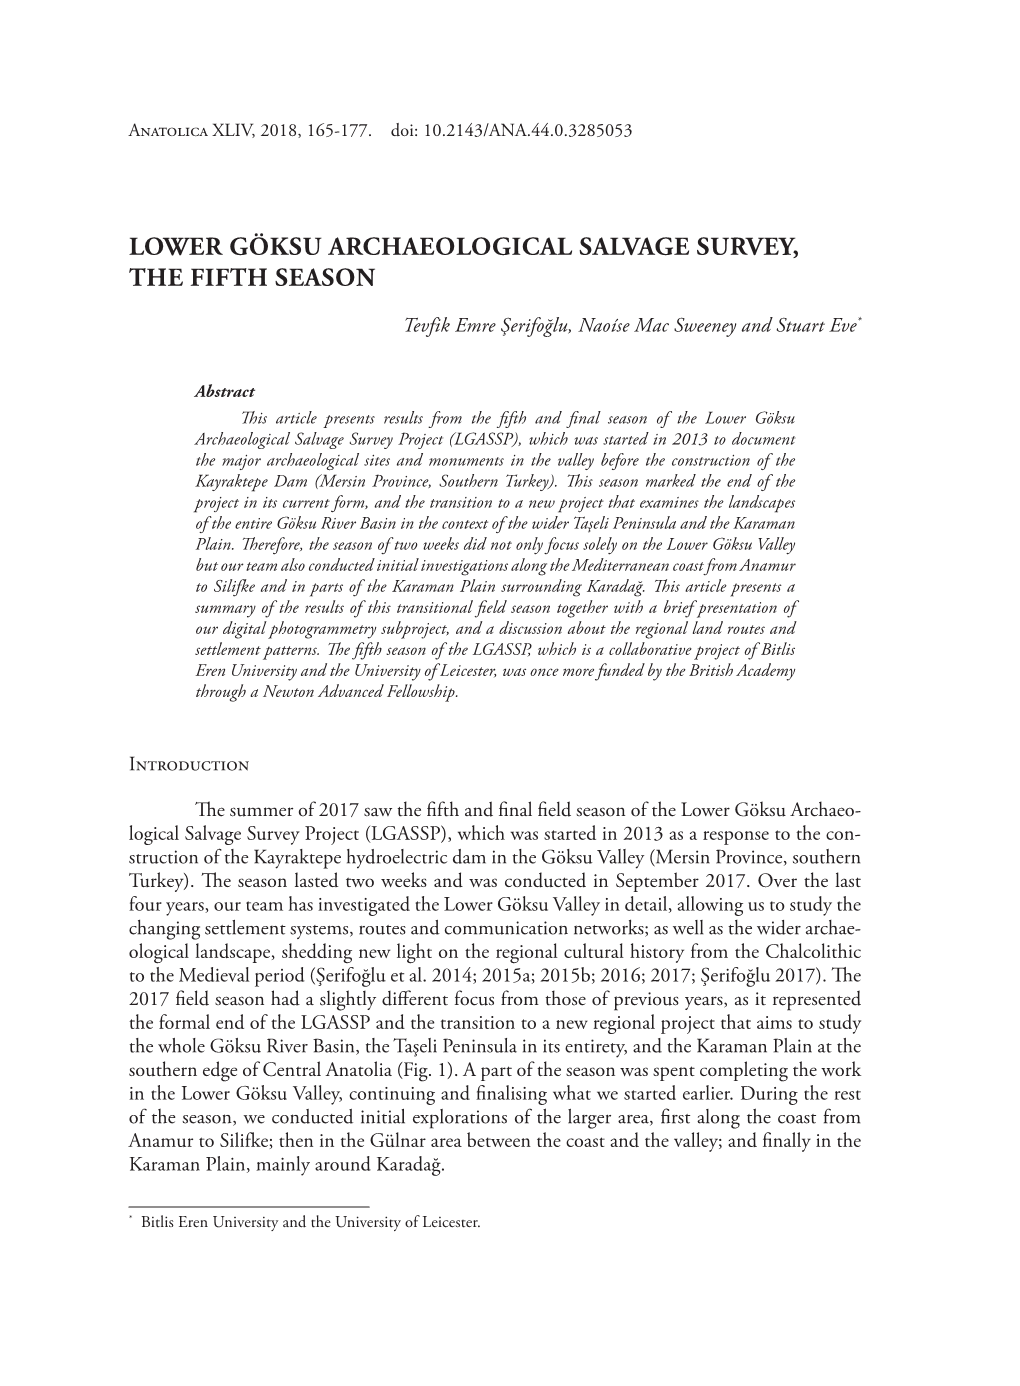 Lower Göksu Archaeological Salvage Survey, the Fifth Season